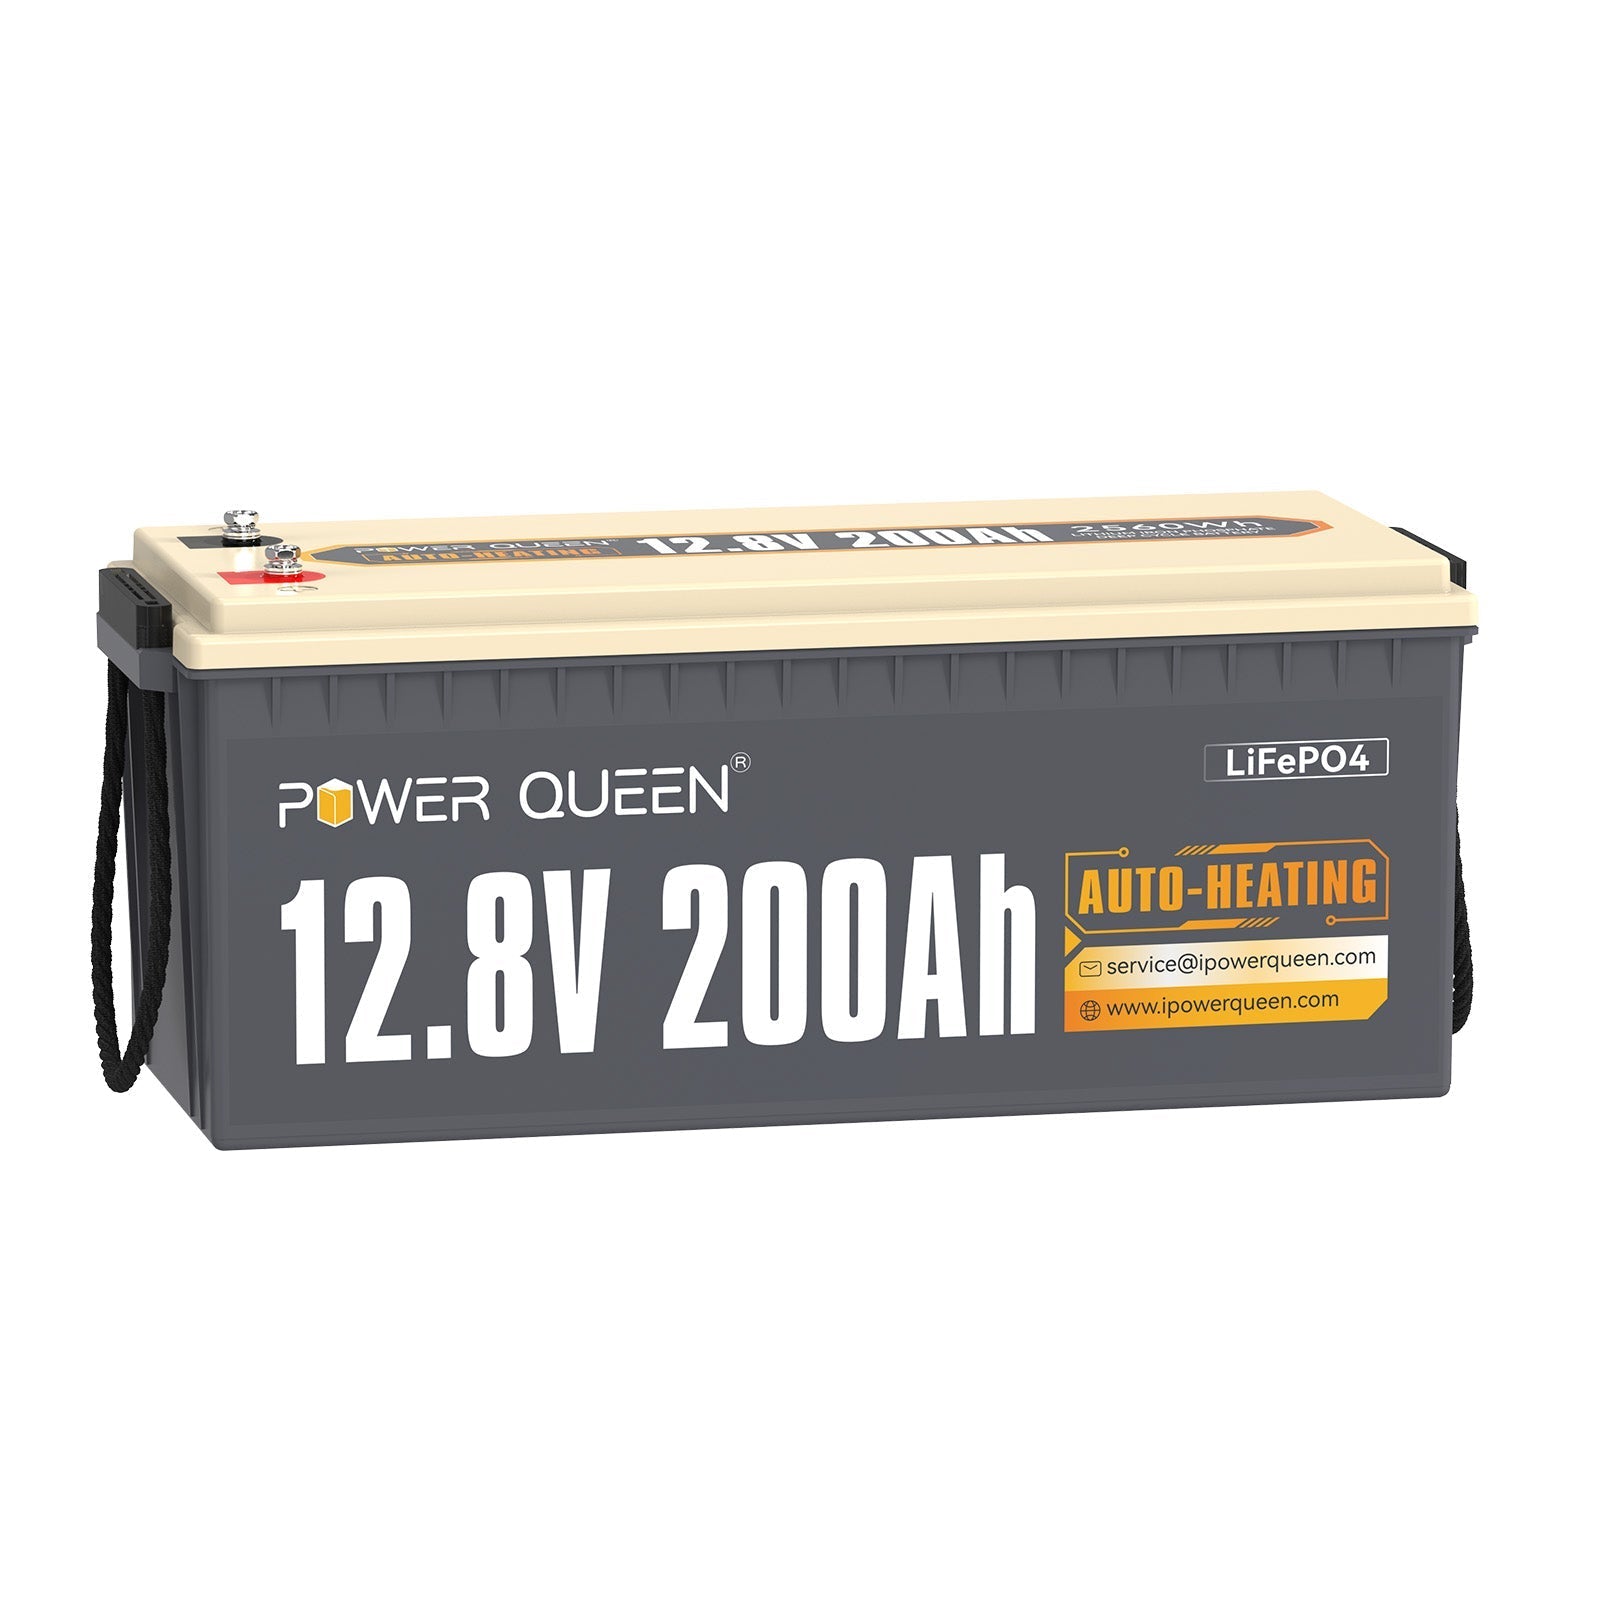 【Like Neu】Power Queen 12,8V 200Ah Selbstheizende LiFePO4-Akku, Eingebautes 100A BMS